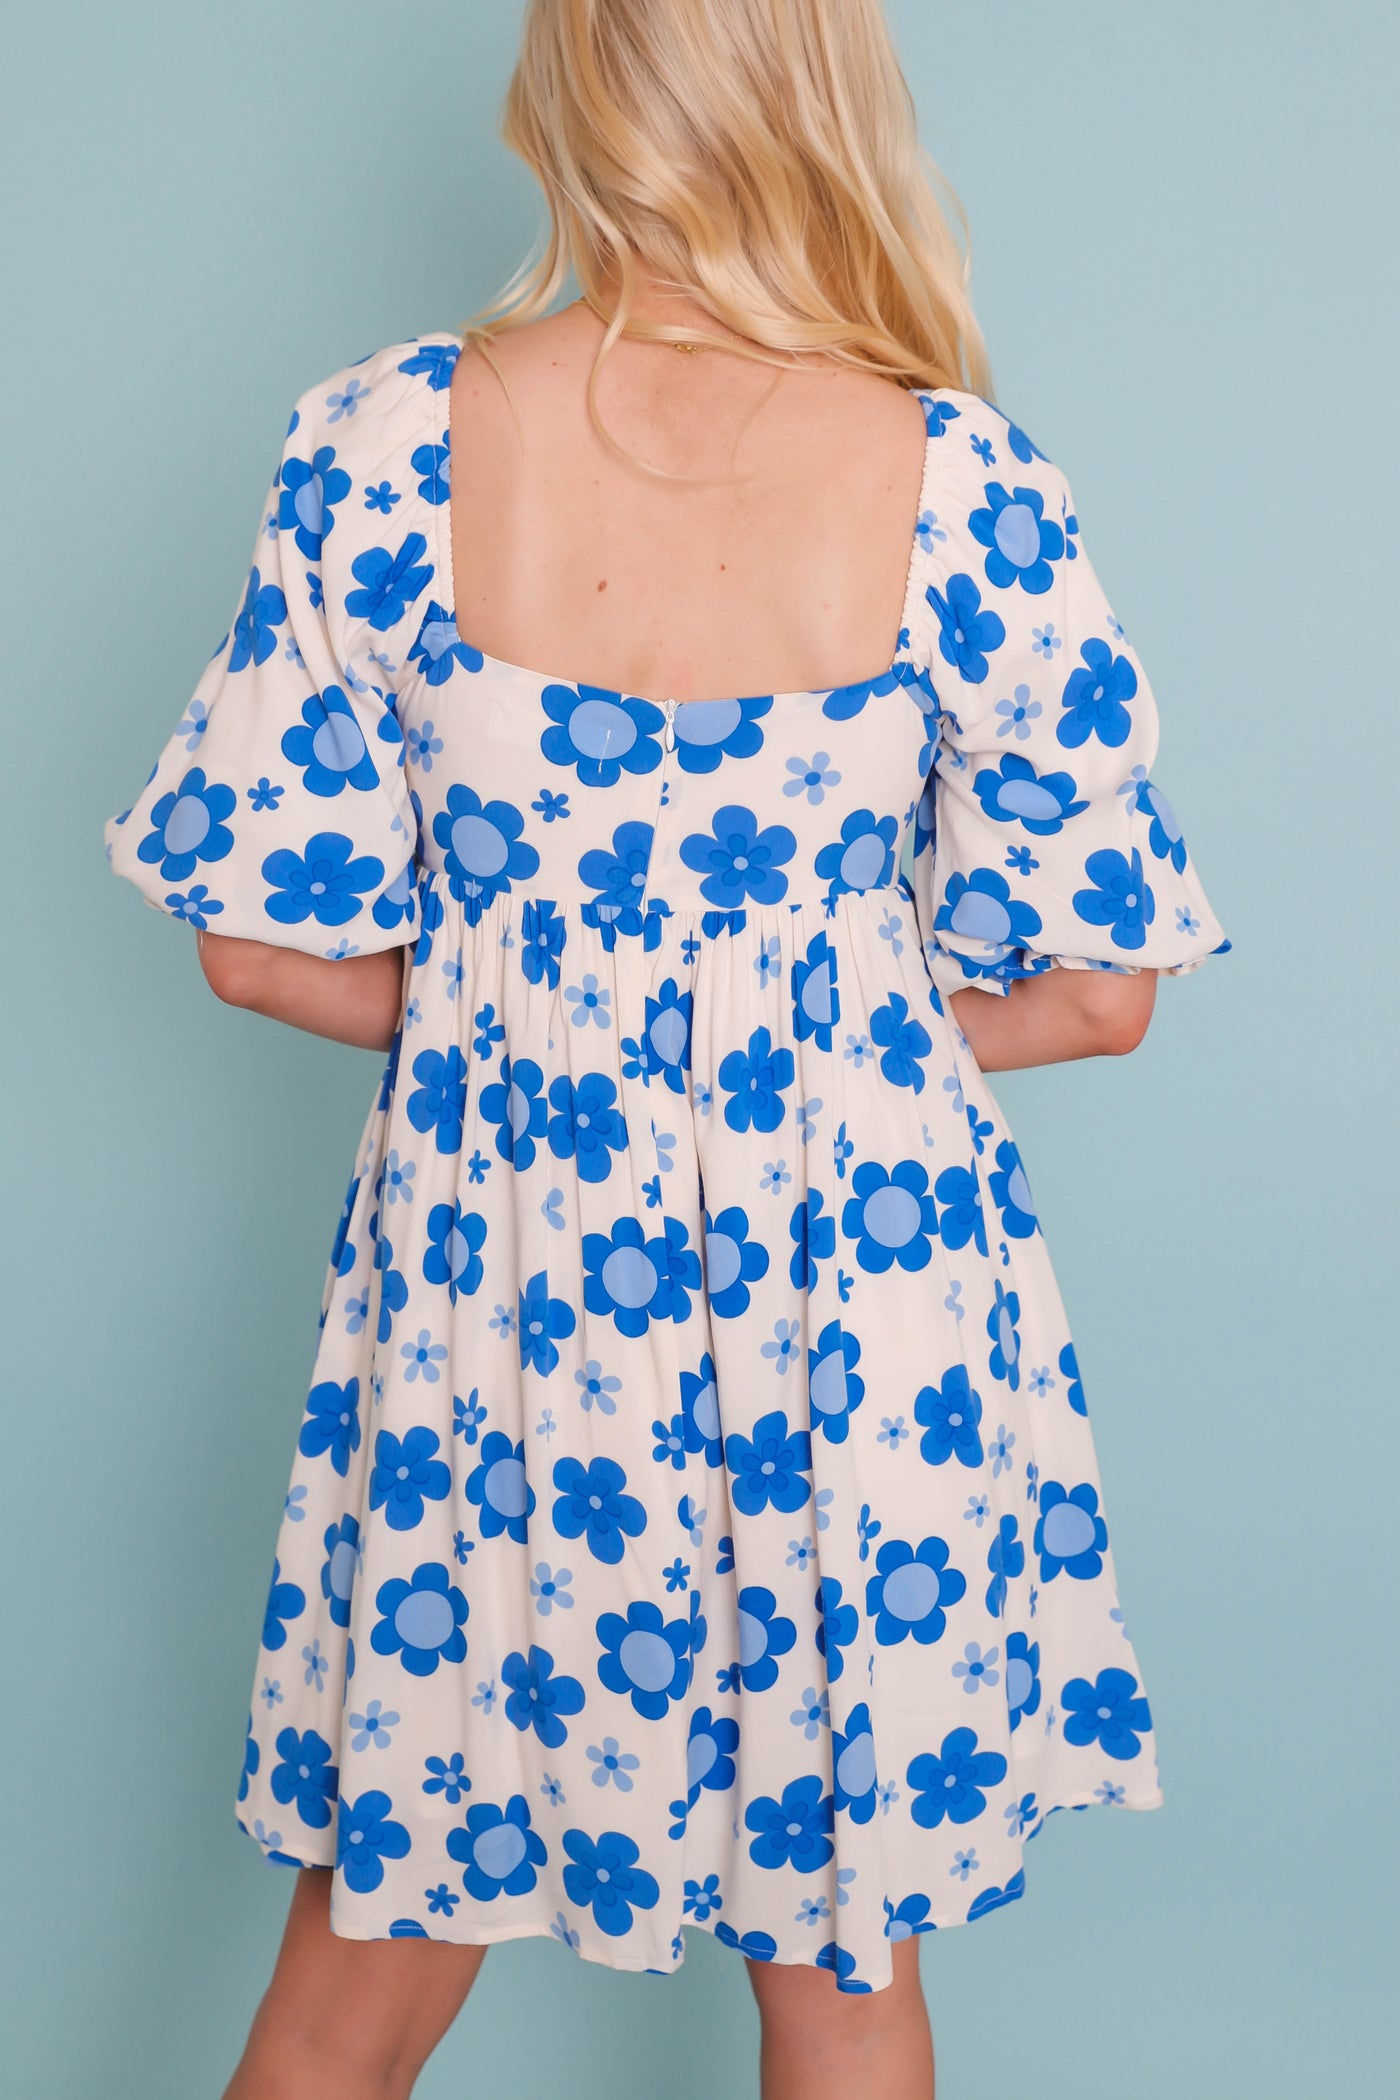 Fun Blue Flower Dress- Retro Inspired Dresses- Fun Blue Spring Dress